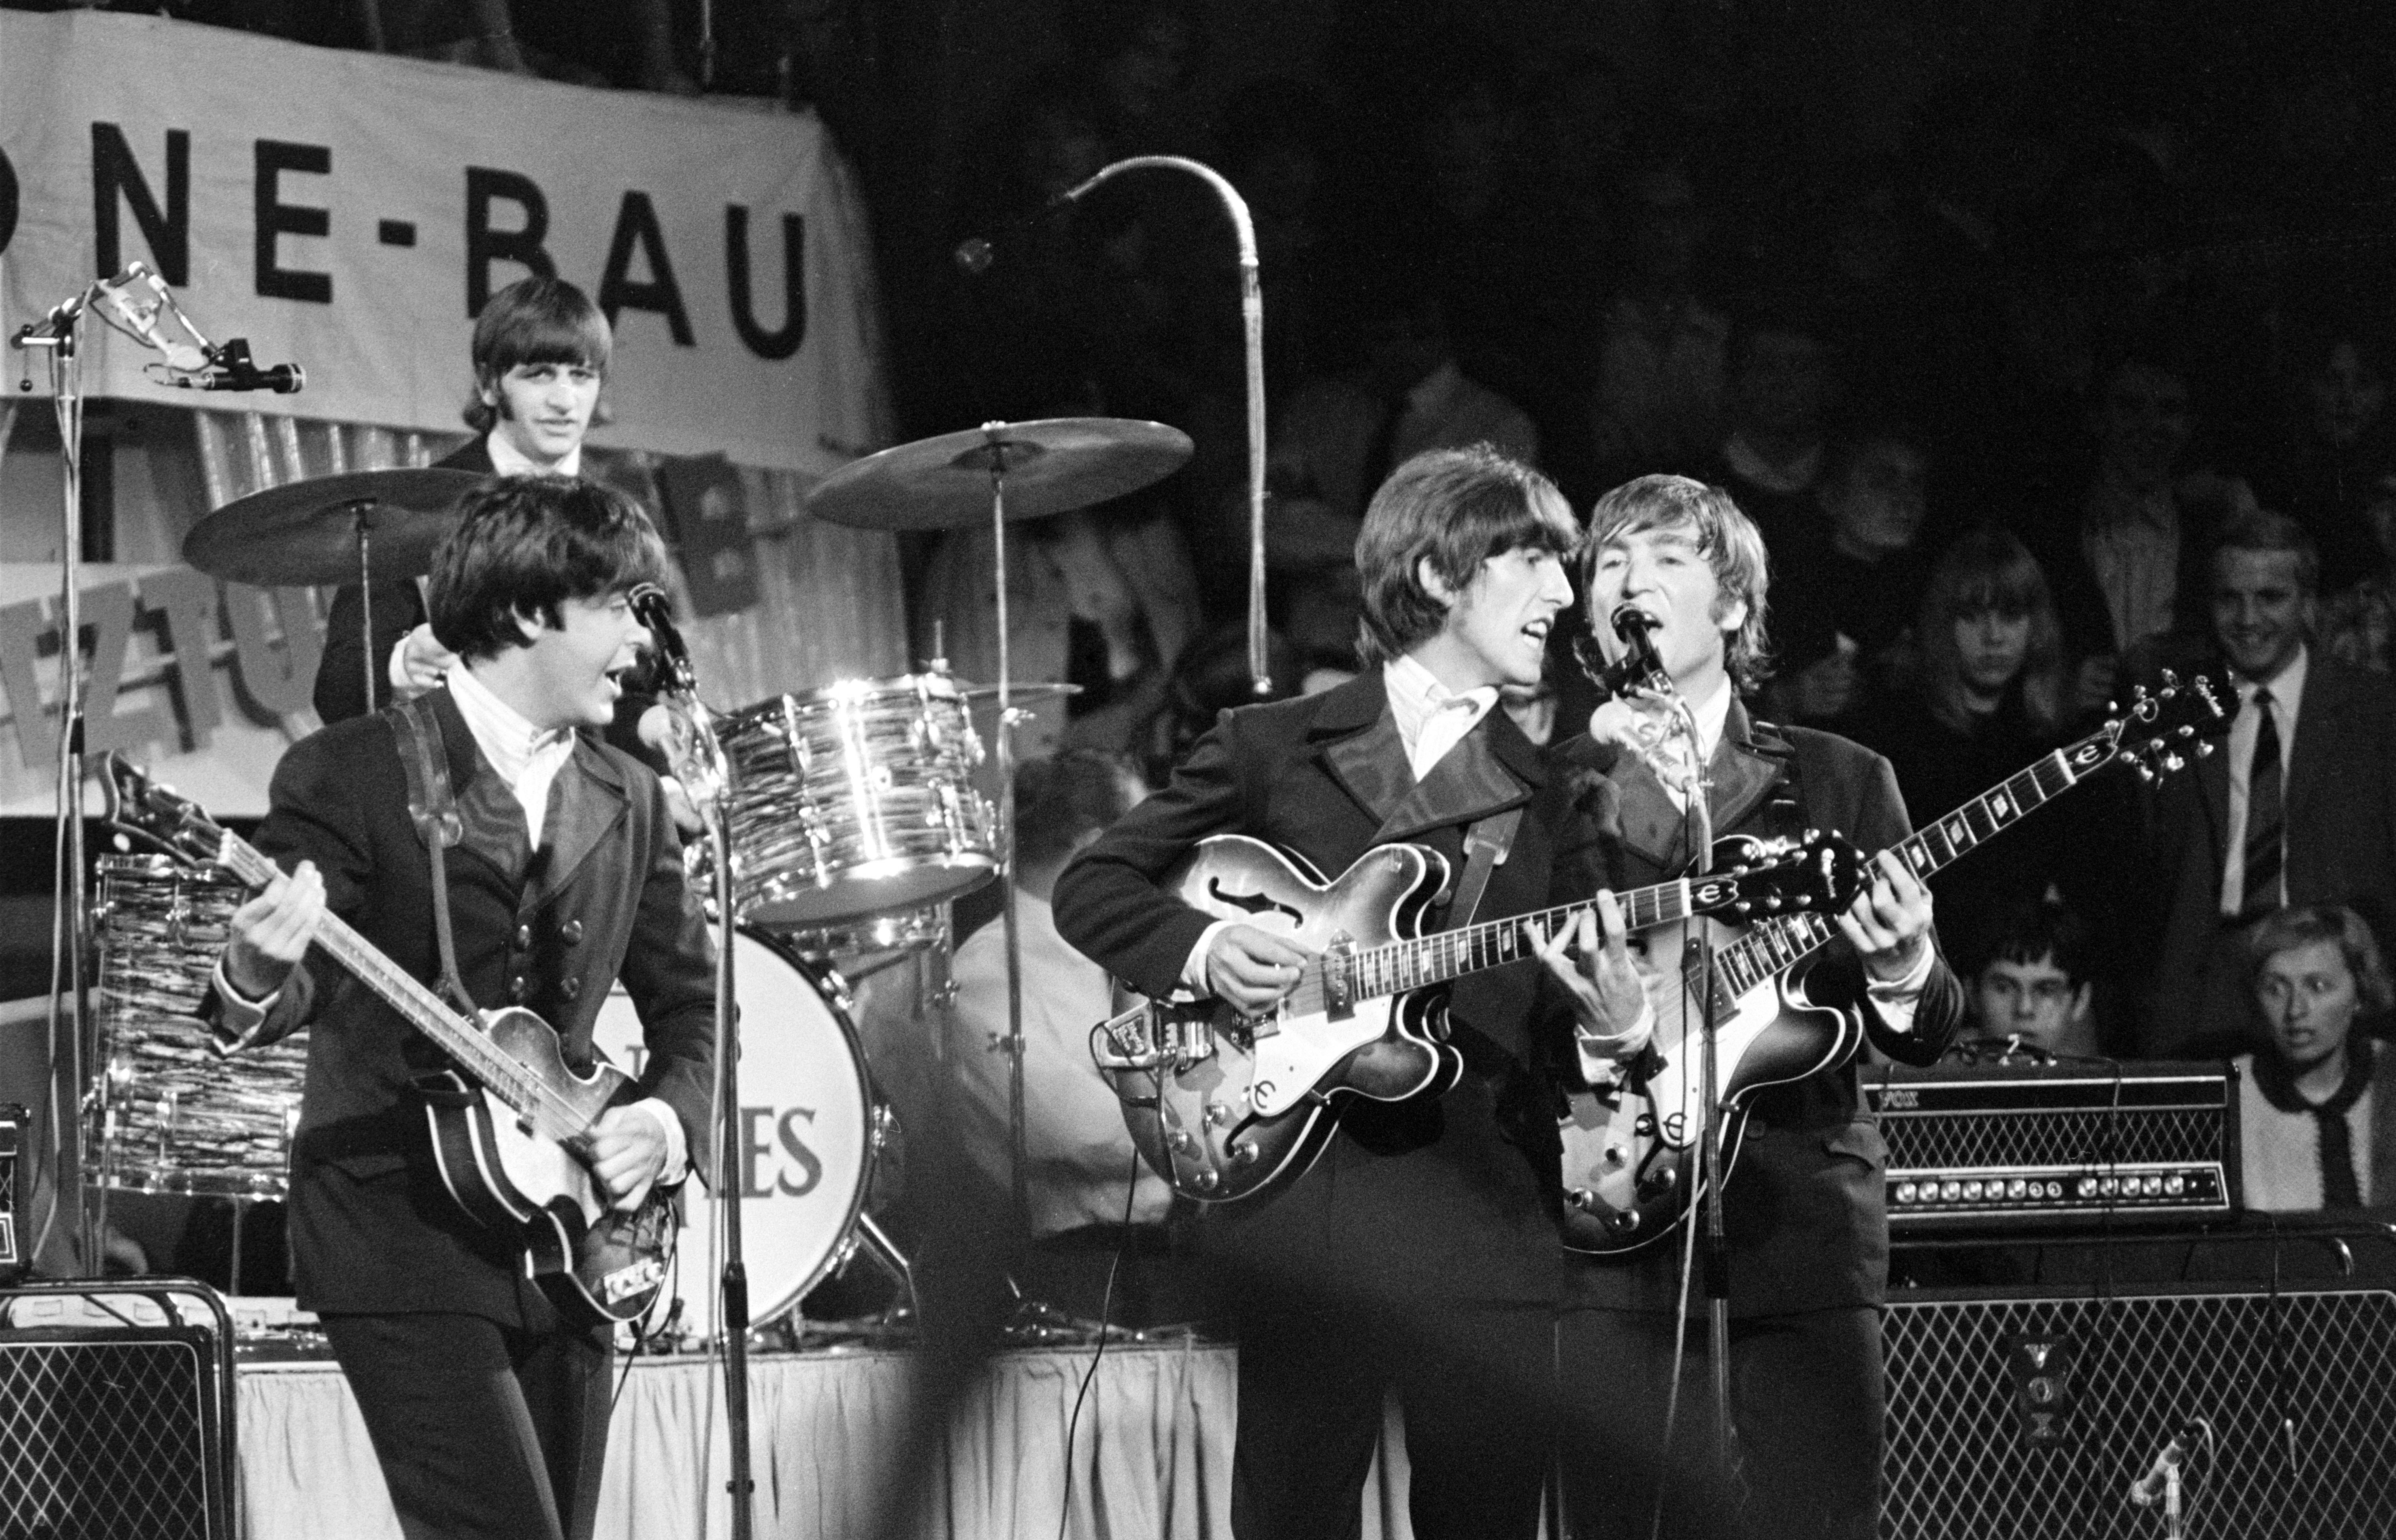 Группа битлз песни слушать. Группа Битлз на сцене. Группа the Beatles 1960. The Beatles Live 1966. Группа Битлз Битломания.